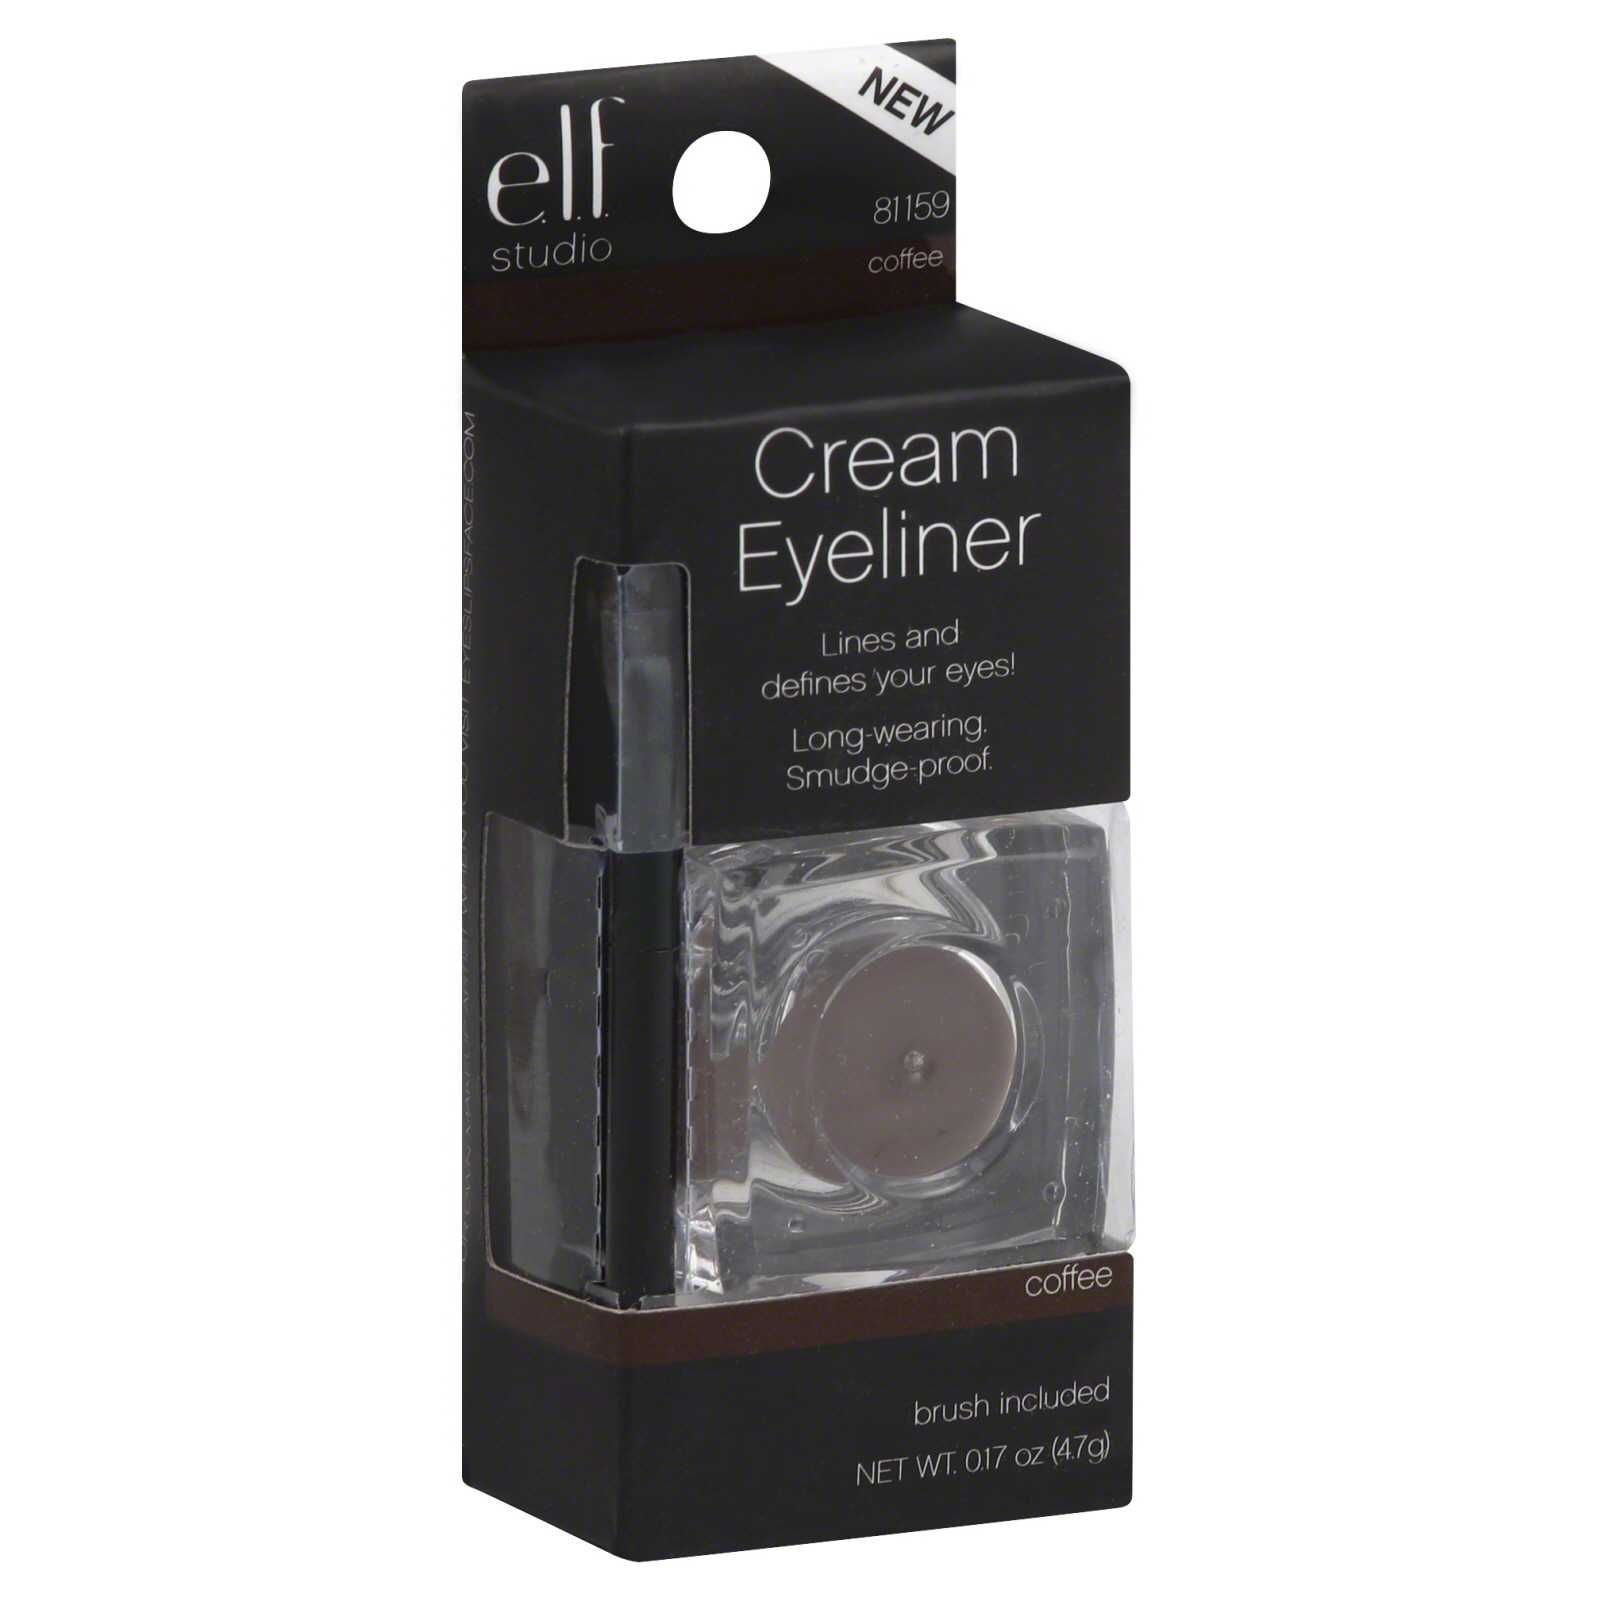 Cream Eyeliner, Coffee 81159, 0.17 oz (4.7 g)